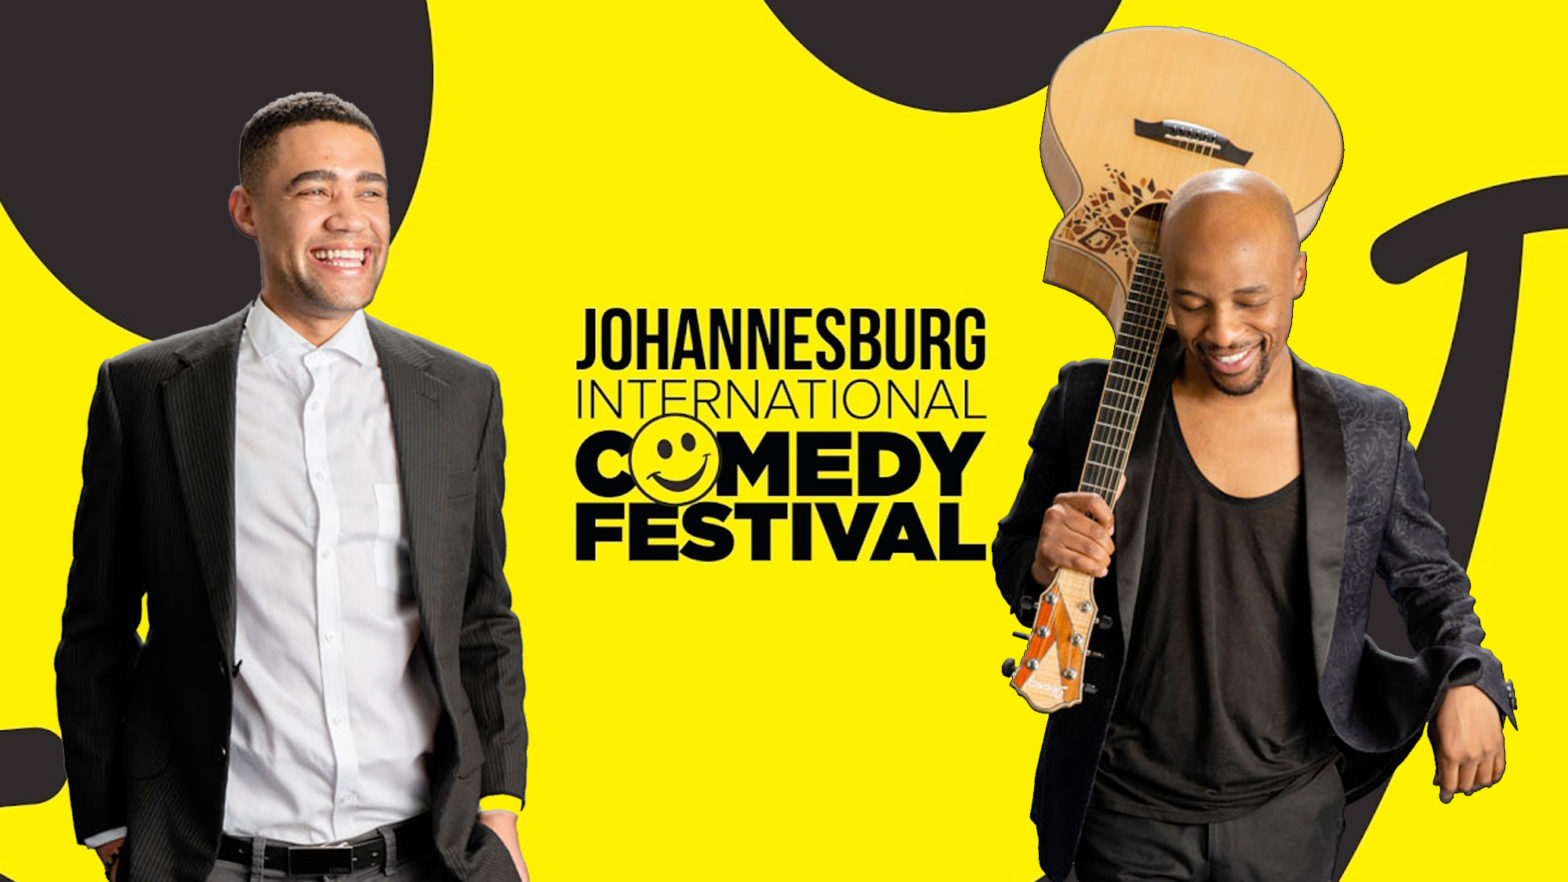 Johannesburg International Comedy Festival